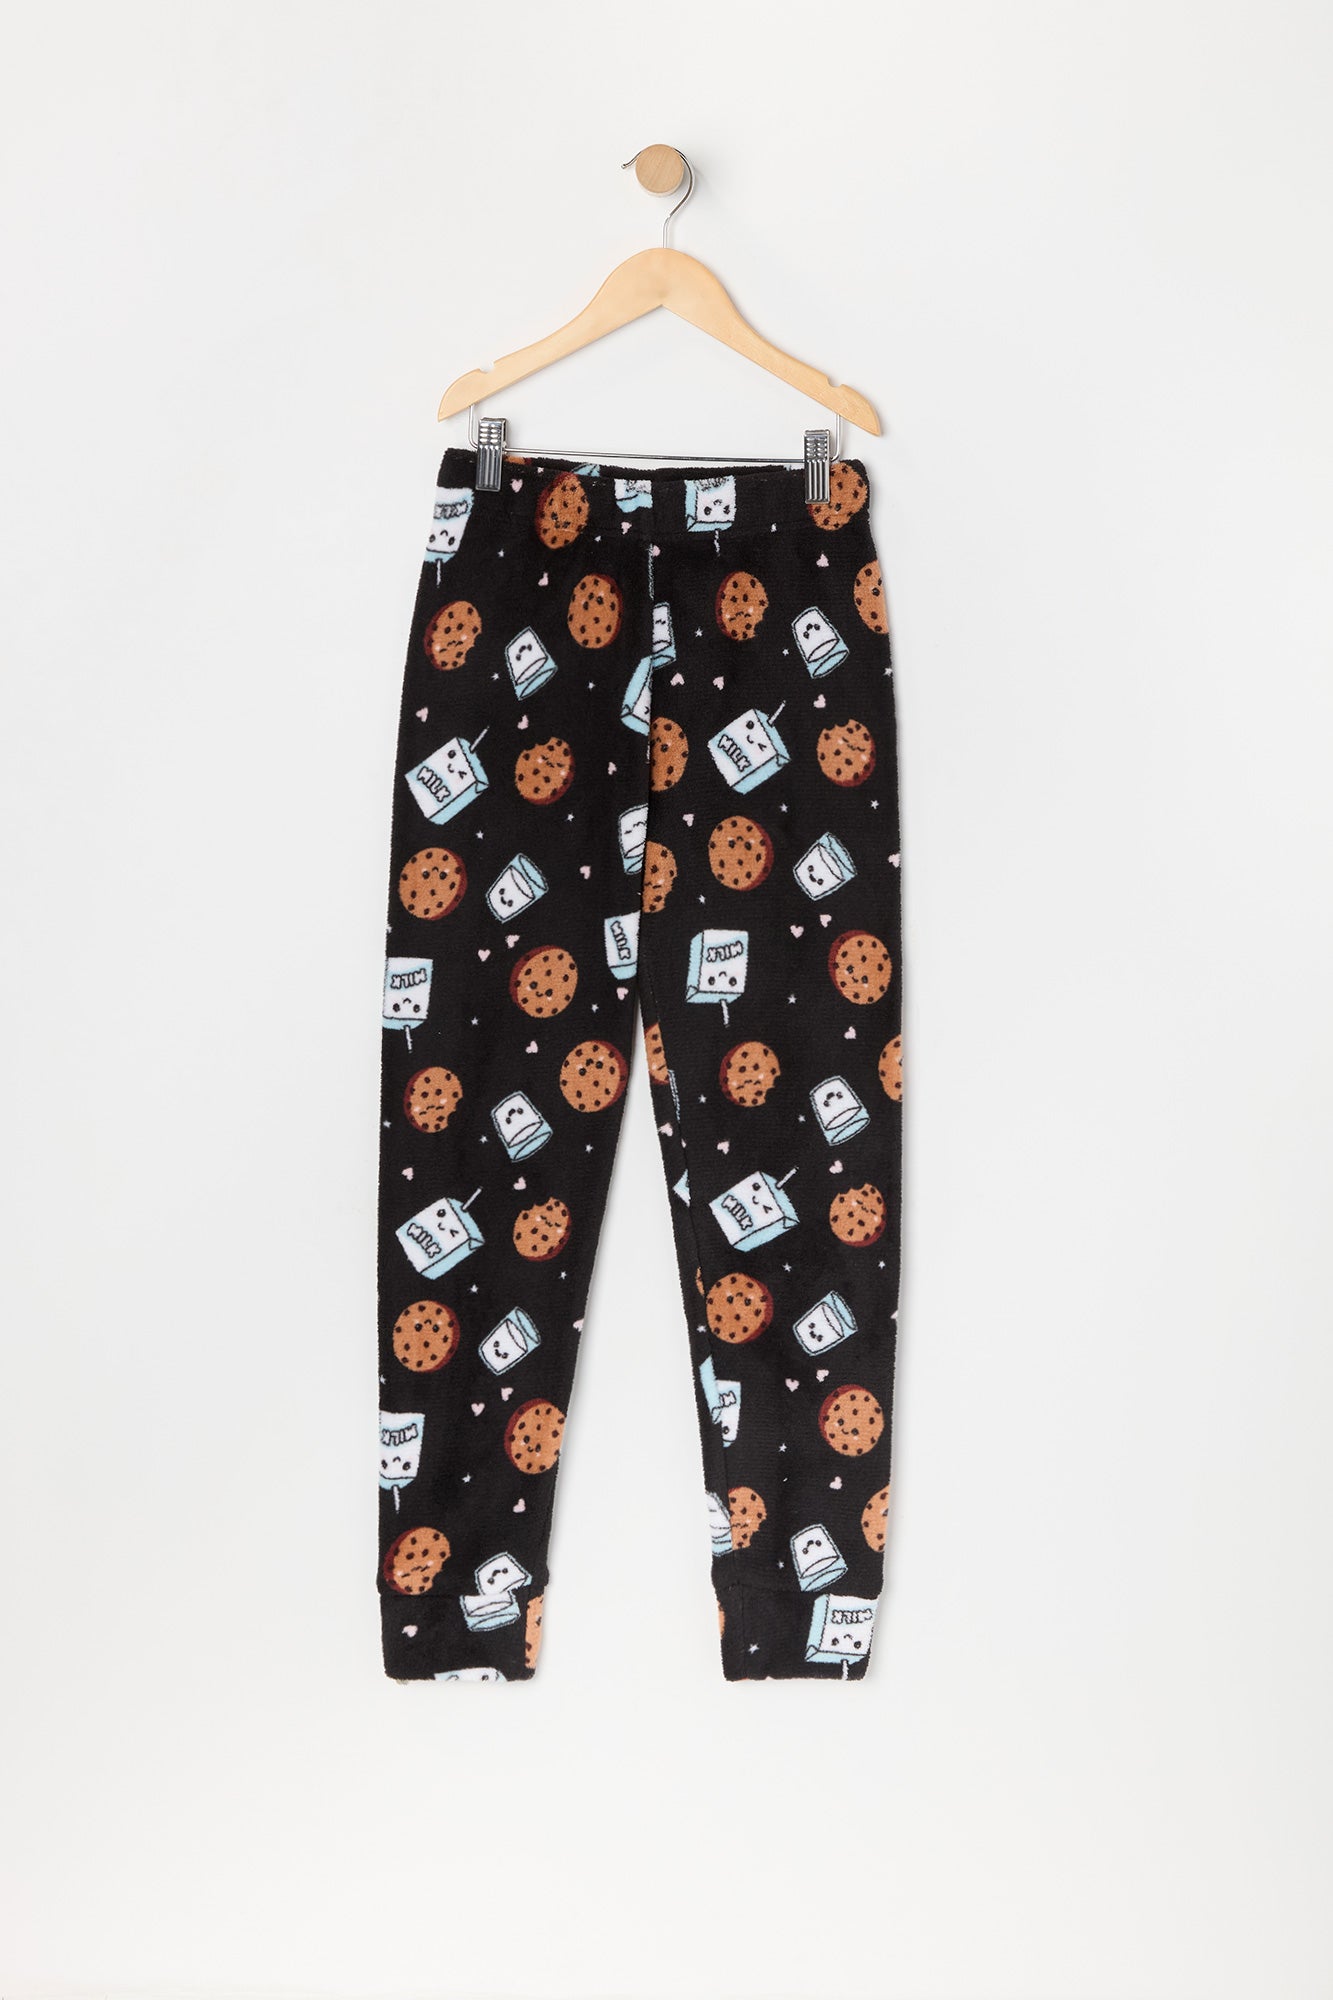 Girls Milk n Cookies Graphic T-Shirt and Pant 2 Piece Pajama Set